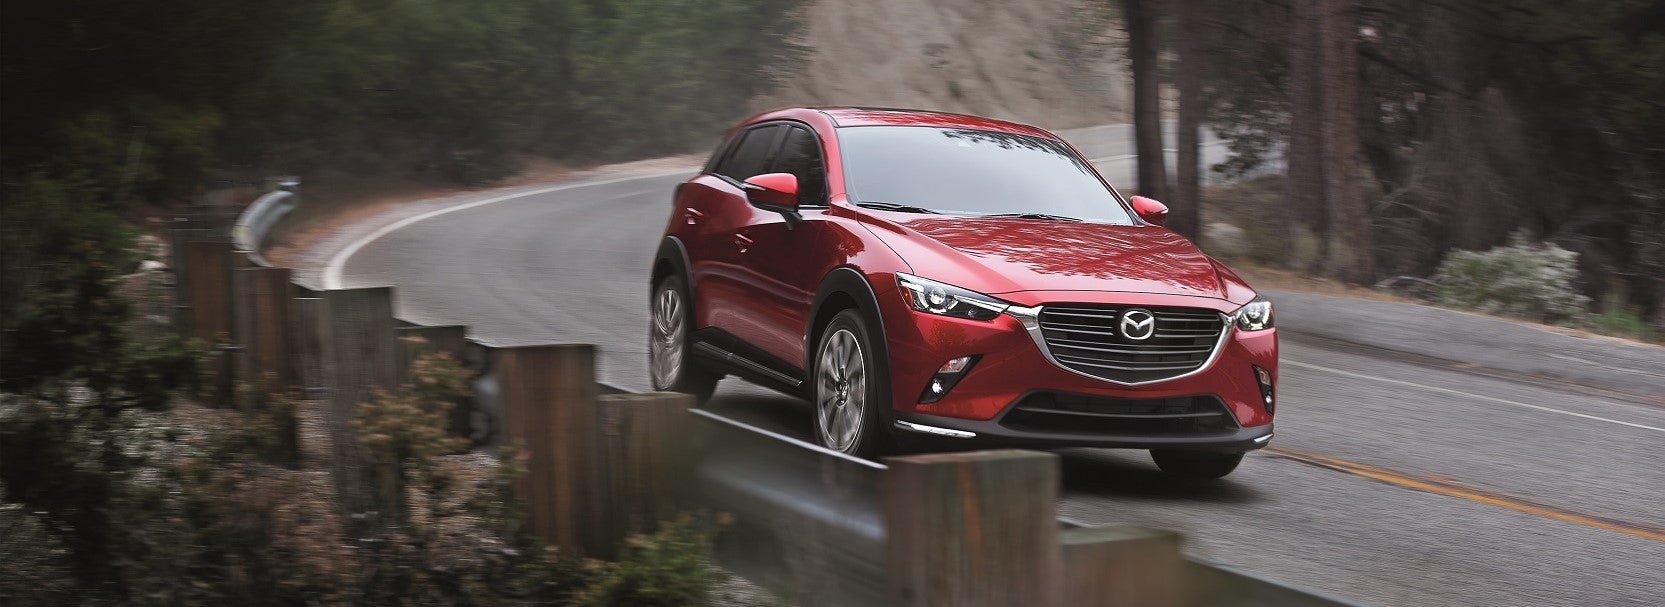 Mazda Certified Pre-Owned Dealer near Newport News VA